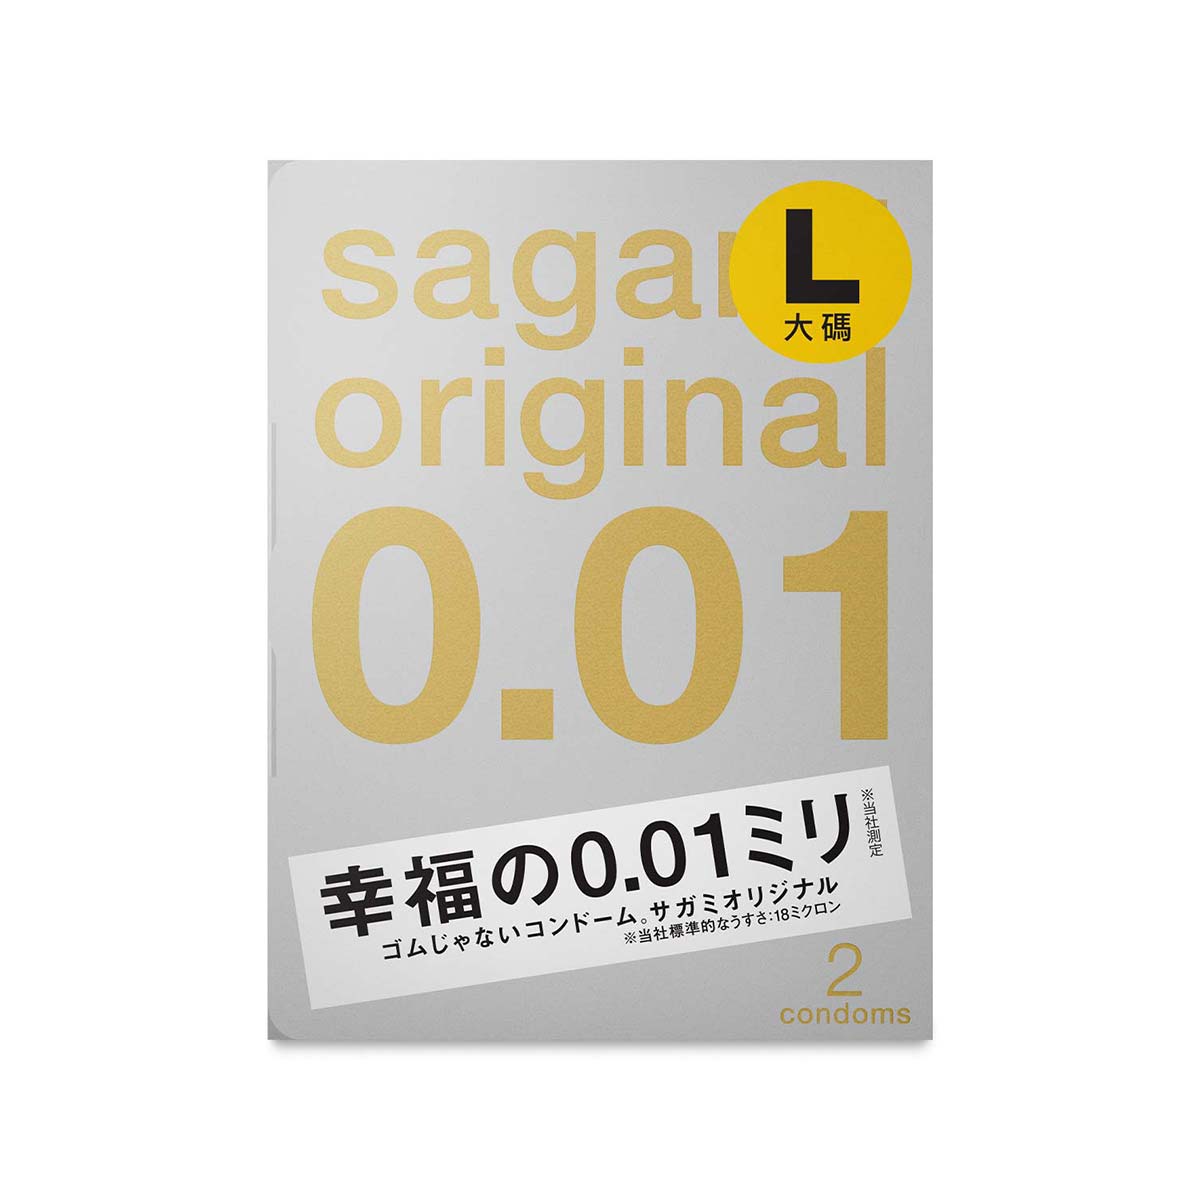 Sagami Original 0.01 Large Size 2s